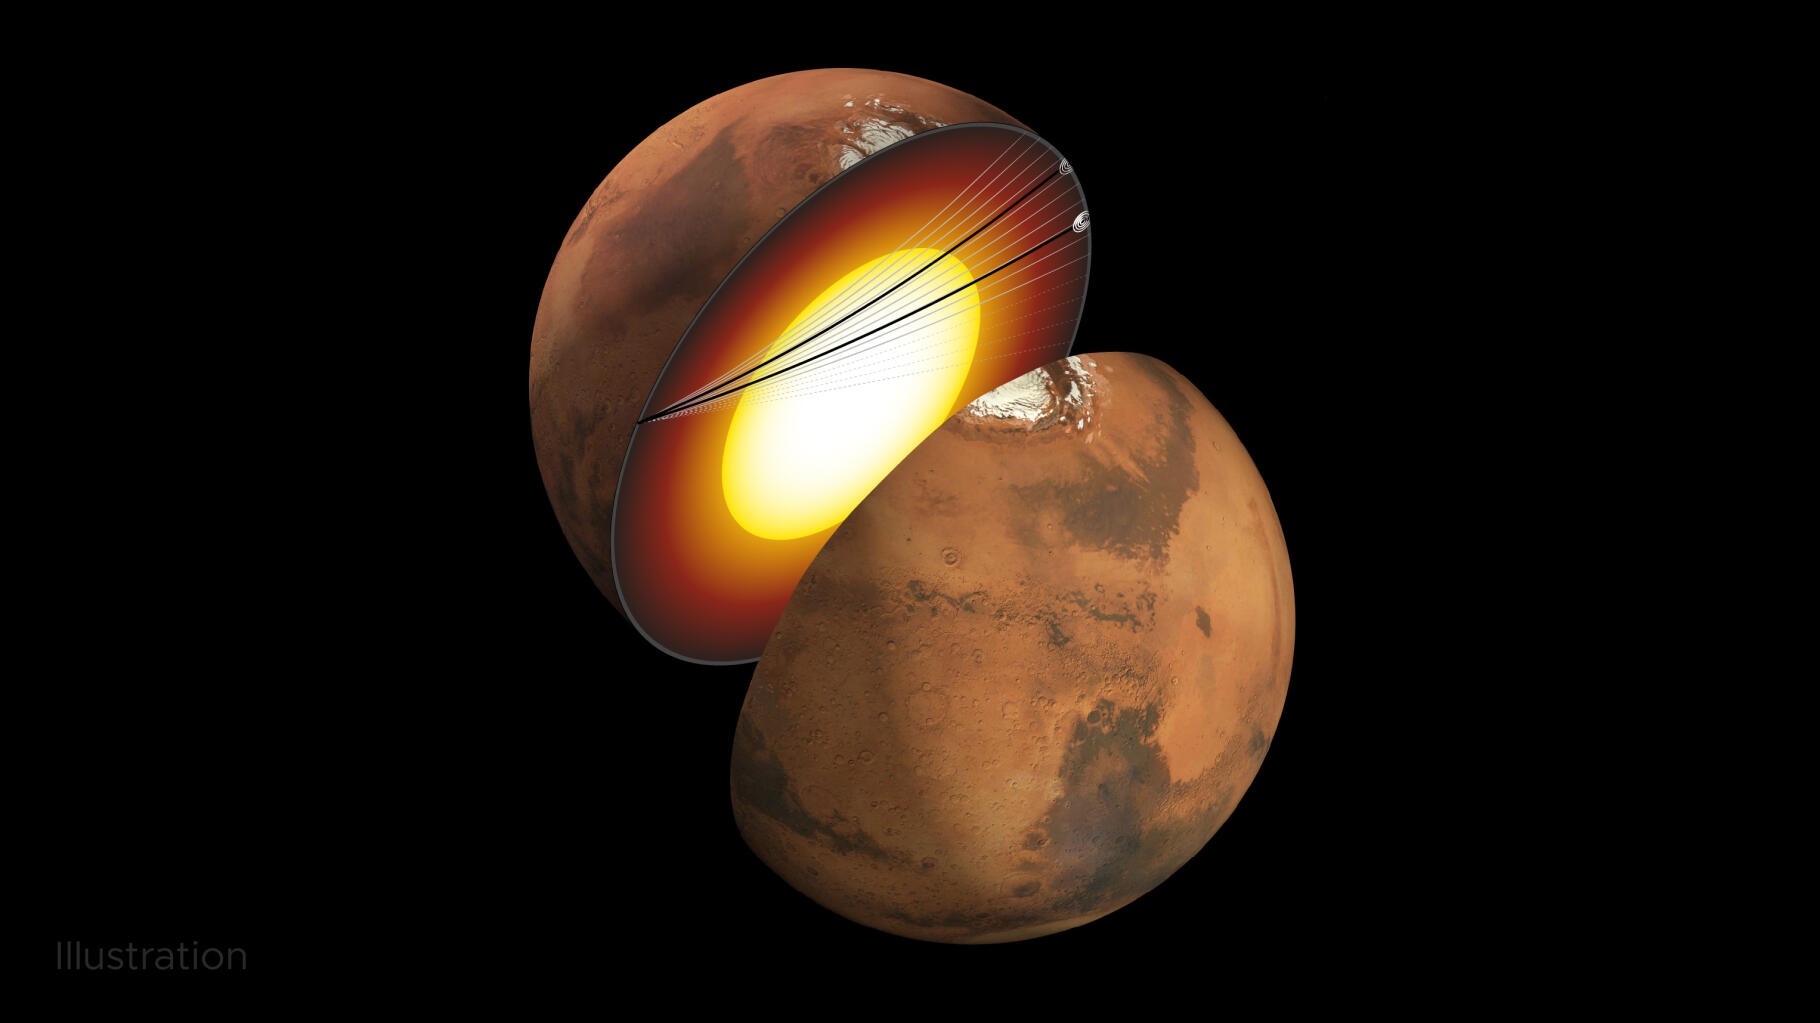 De kern van Mars is “vloeibaar”, in tegenstelling tot die van de aarde